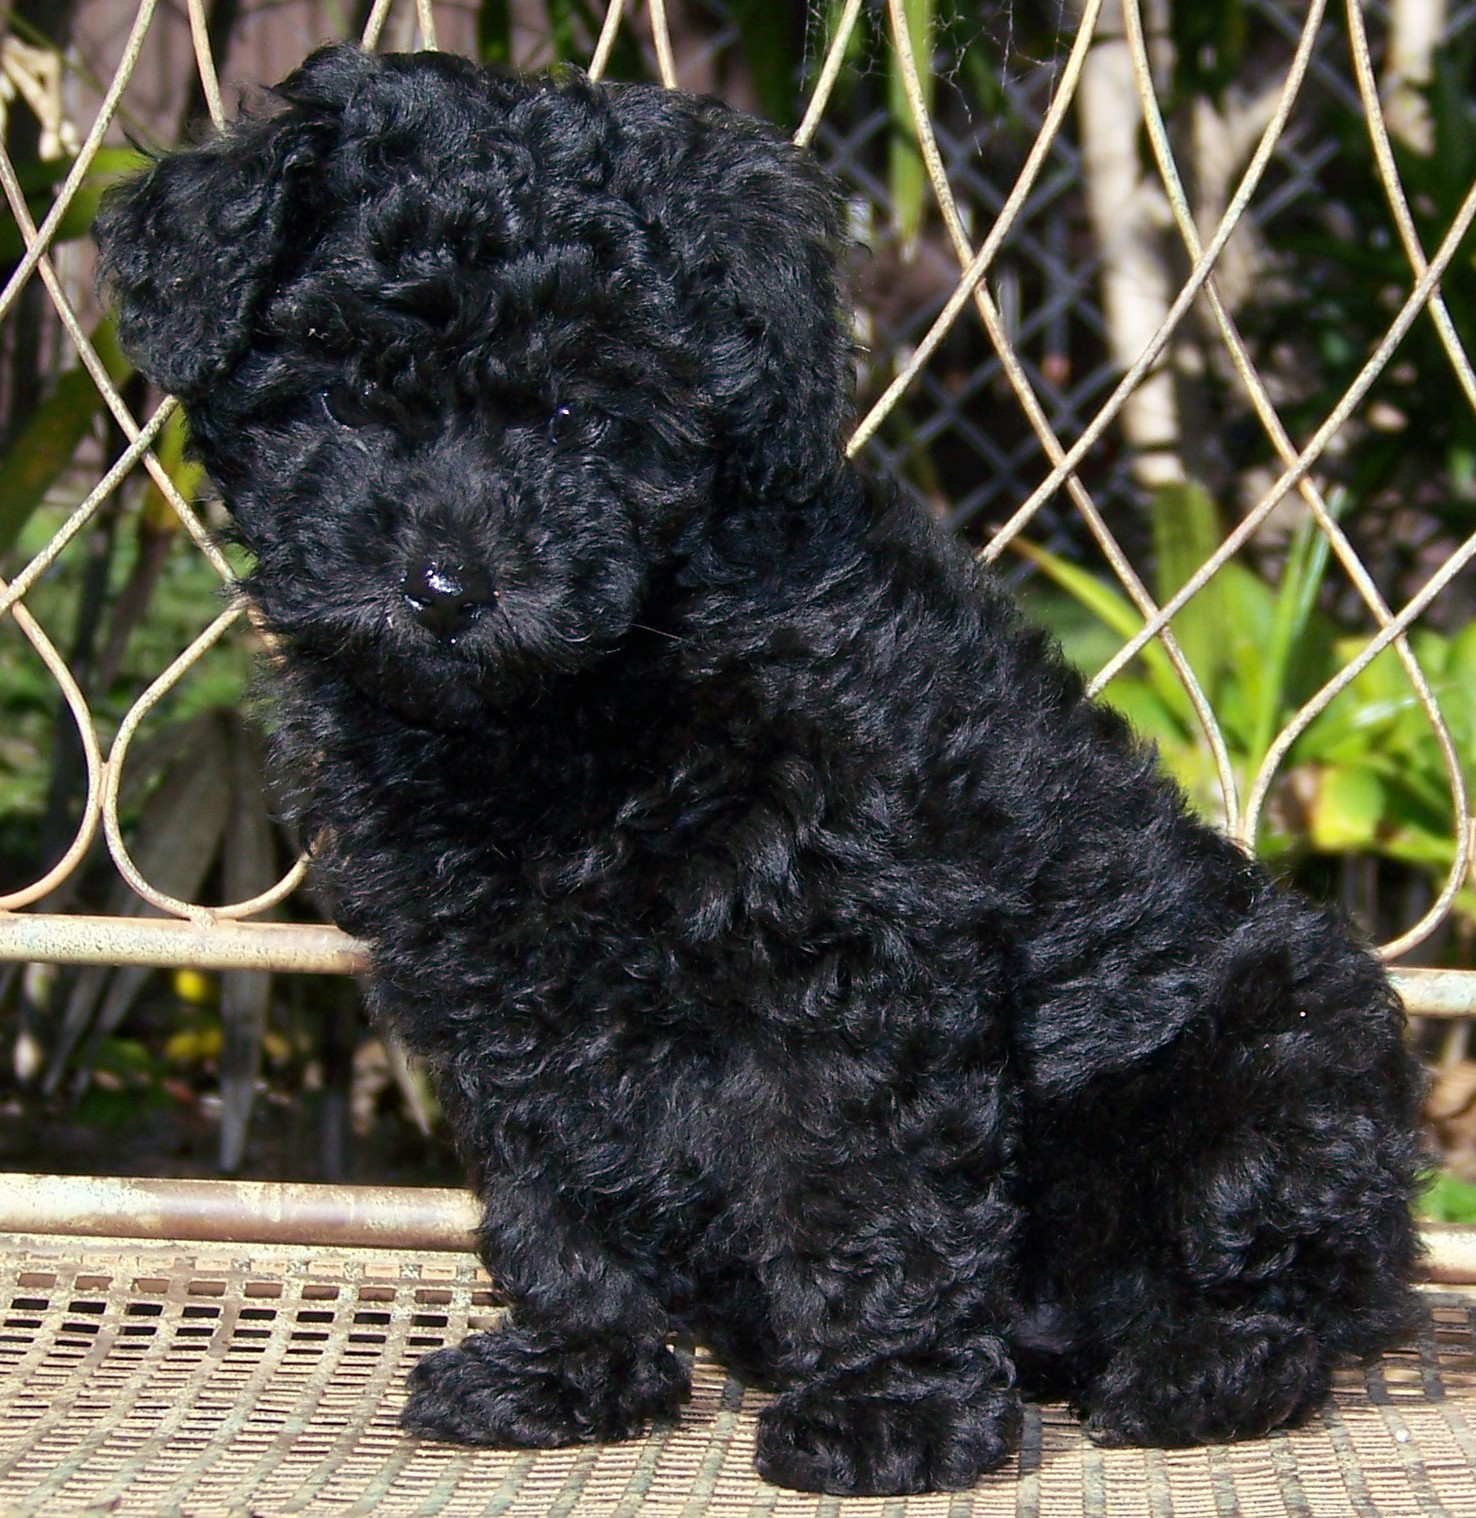 Cute Miniature Black Poodle Dog